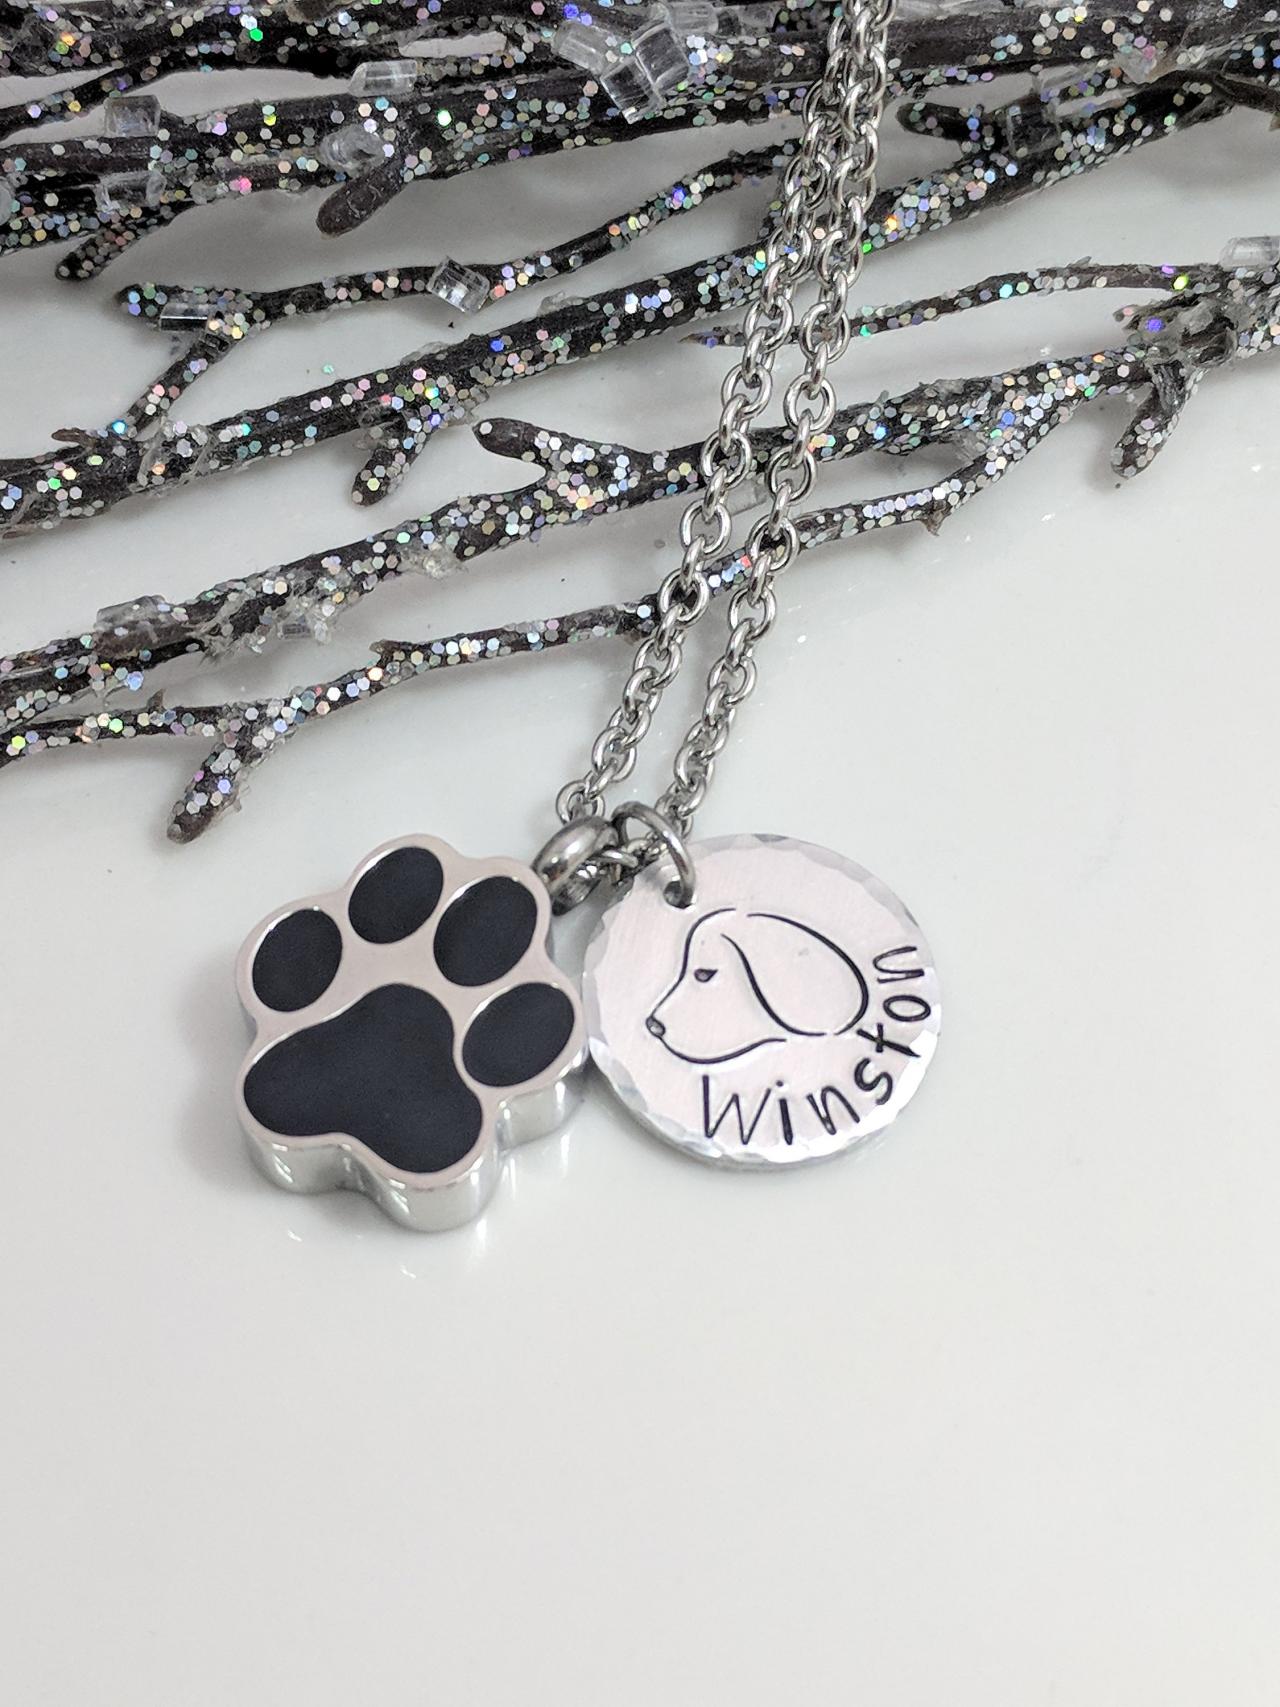 Hand Stamped Necklace Dog Urn- Pet Loss Urn Hand Stamped Jewelry- Paw Urn Necklace- Loss Of Pet- Urn For Pet Ashes- Dog Remembrance- Dog